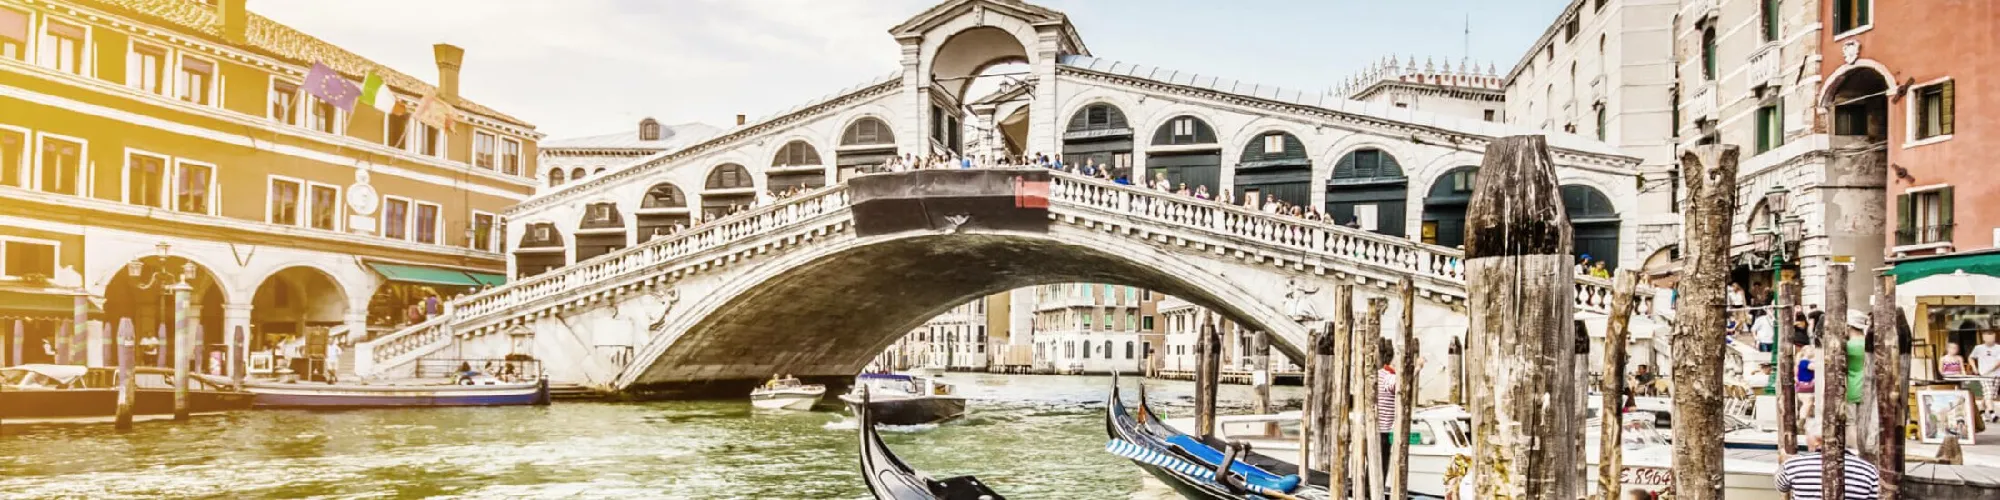 Städtereise Venedig background image